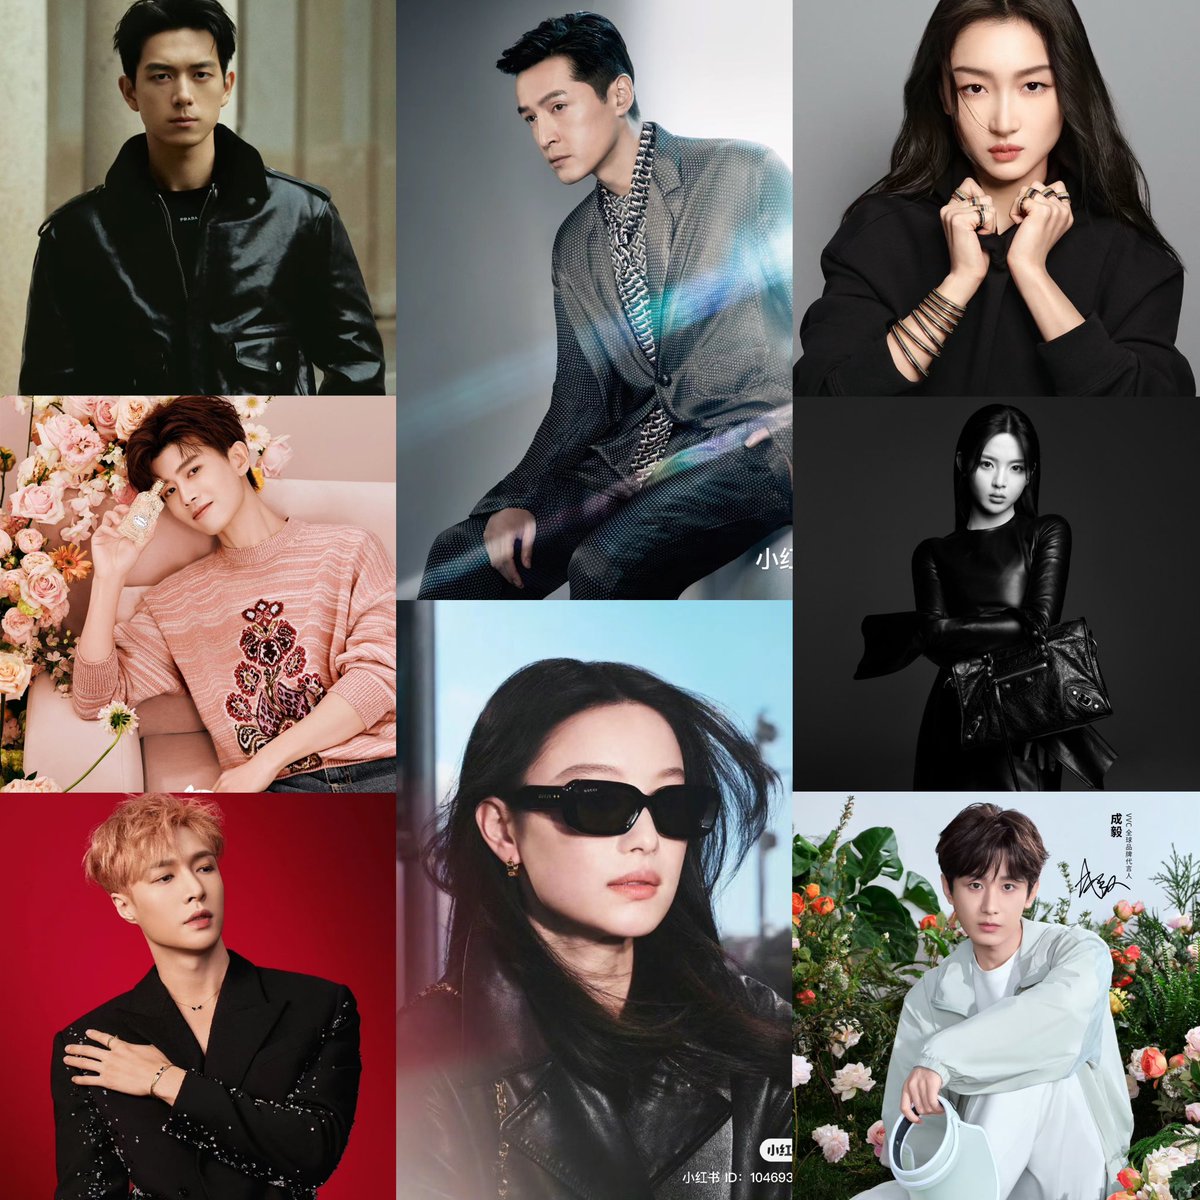 Global Campaigns of C-Artists 

#XiaoZhan: Gucci (4), Tods (5), Boucheron, Zenith (2), Ralph Lauren Fragrance (2), Nars (many), L'Oreal Pro
#Dilireba: Dior (2), Mikimoto (many), Panerai, Clarins (2)
#LiuYifei: LV, Bvlgari (2), Tissot, Shiseido (many)
#JacksonWang: Cartier, LV,…